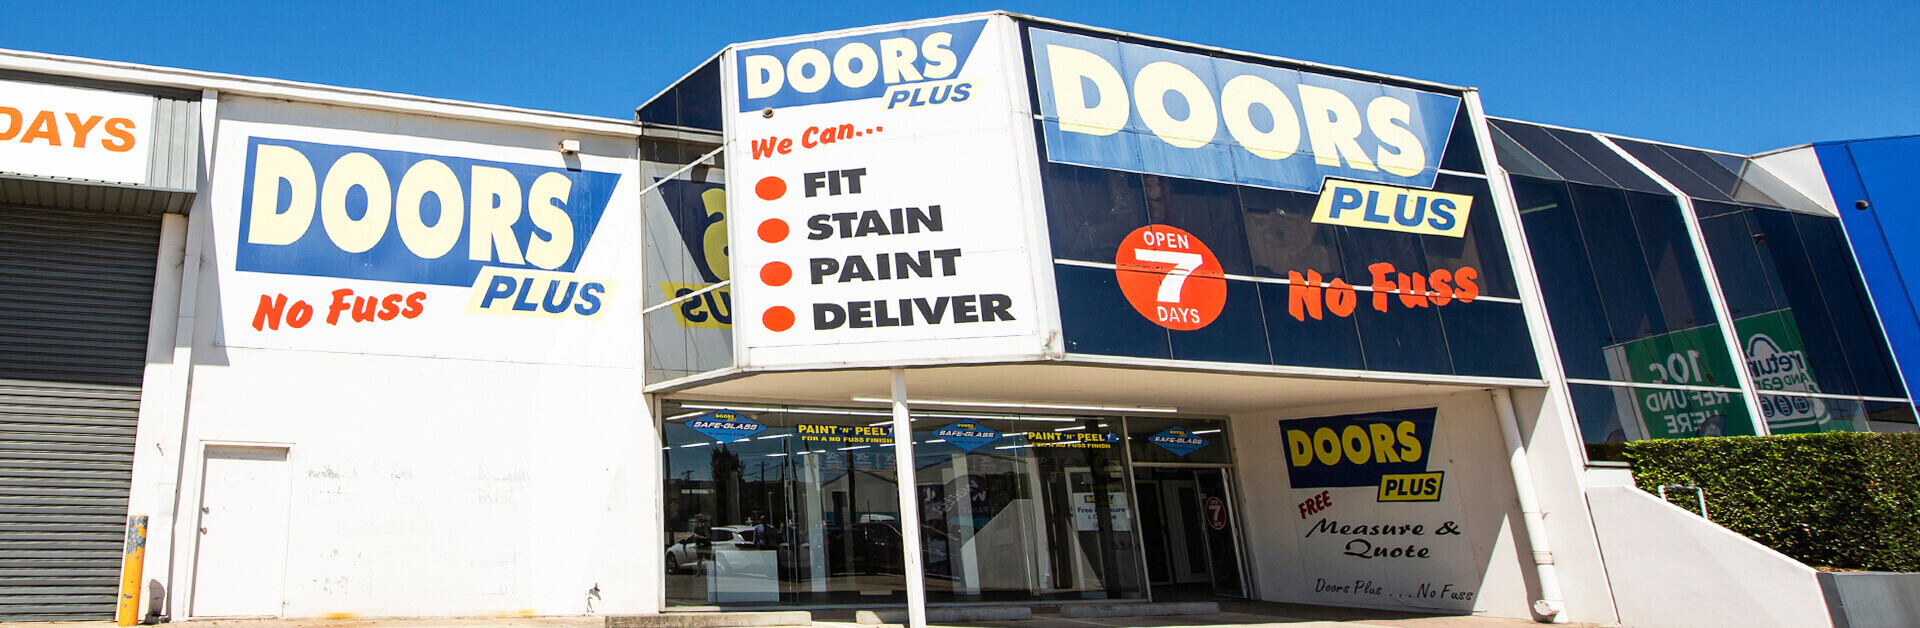 Doors Plus Granville Showroom in Sydney, NSW entrance view